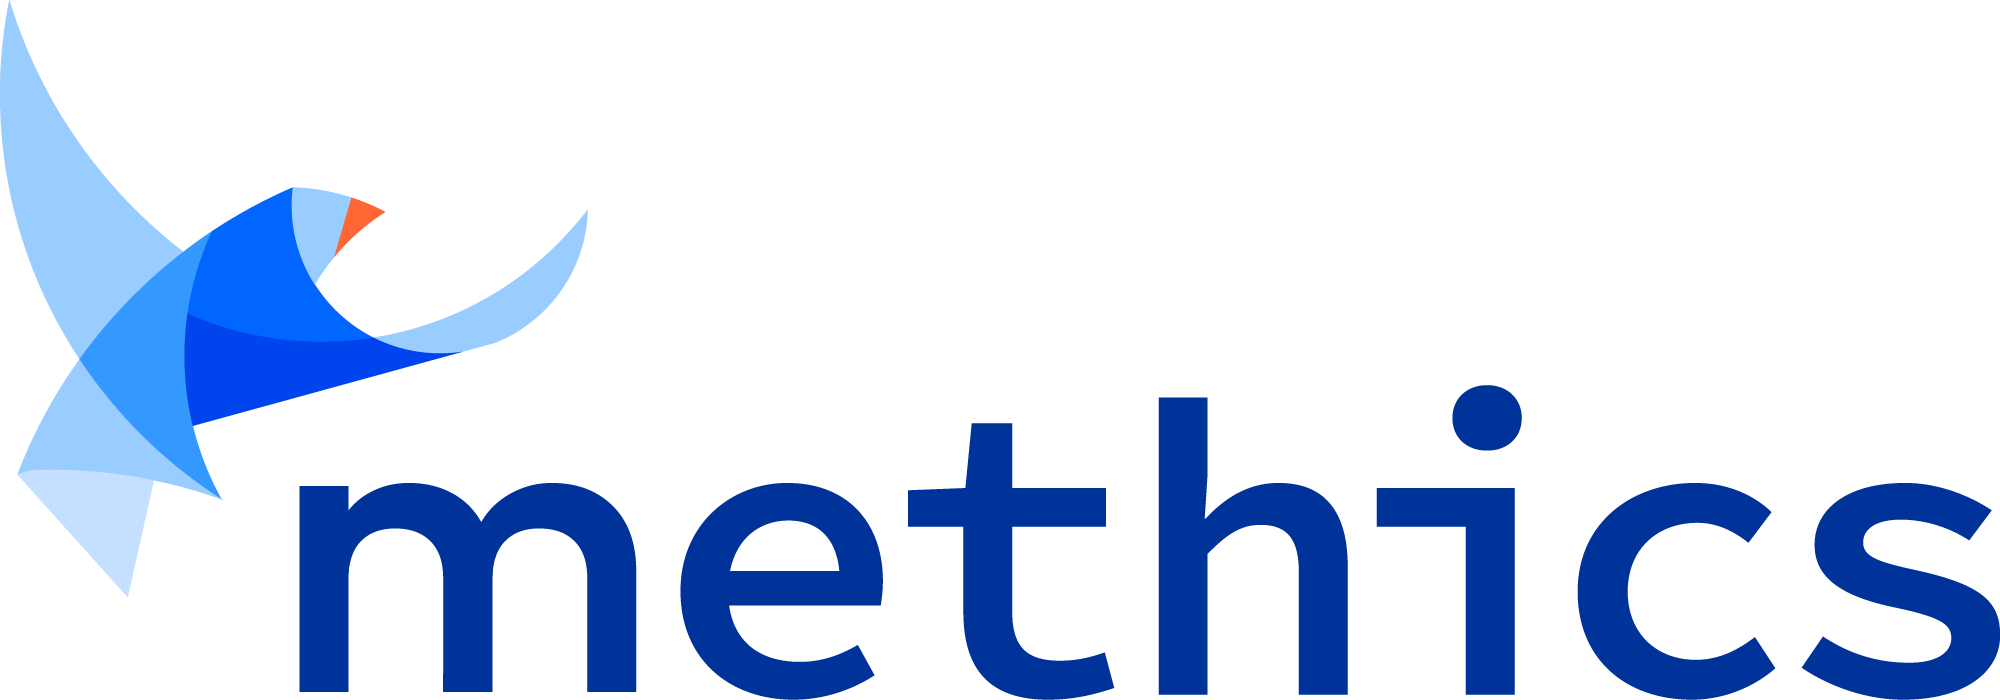 Methics logo